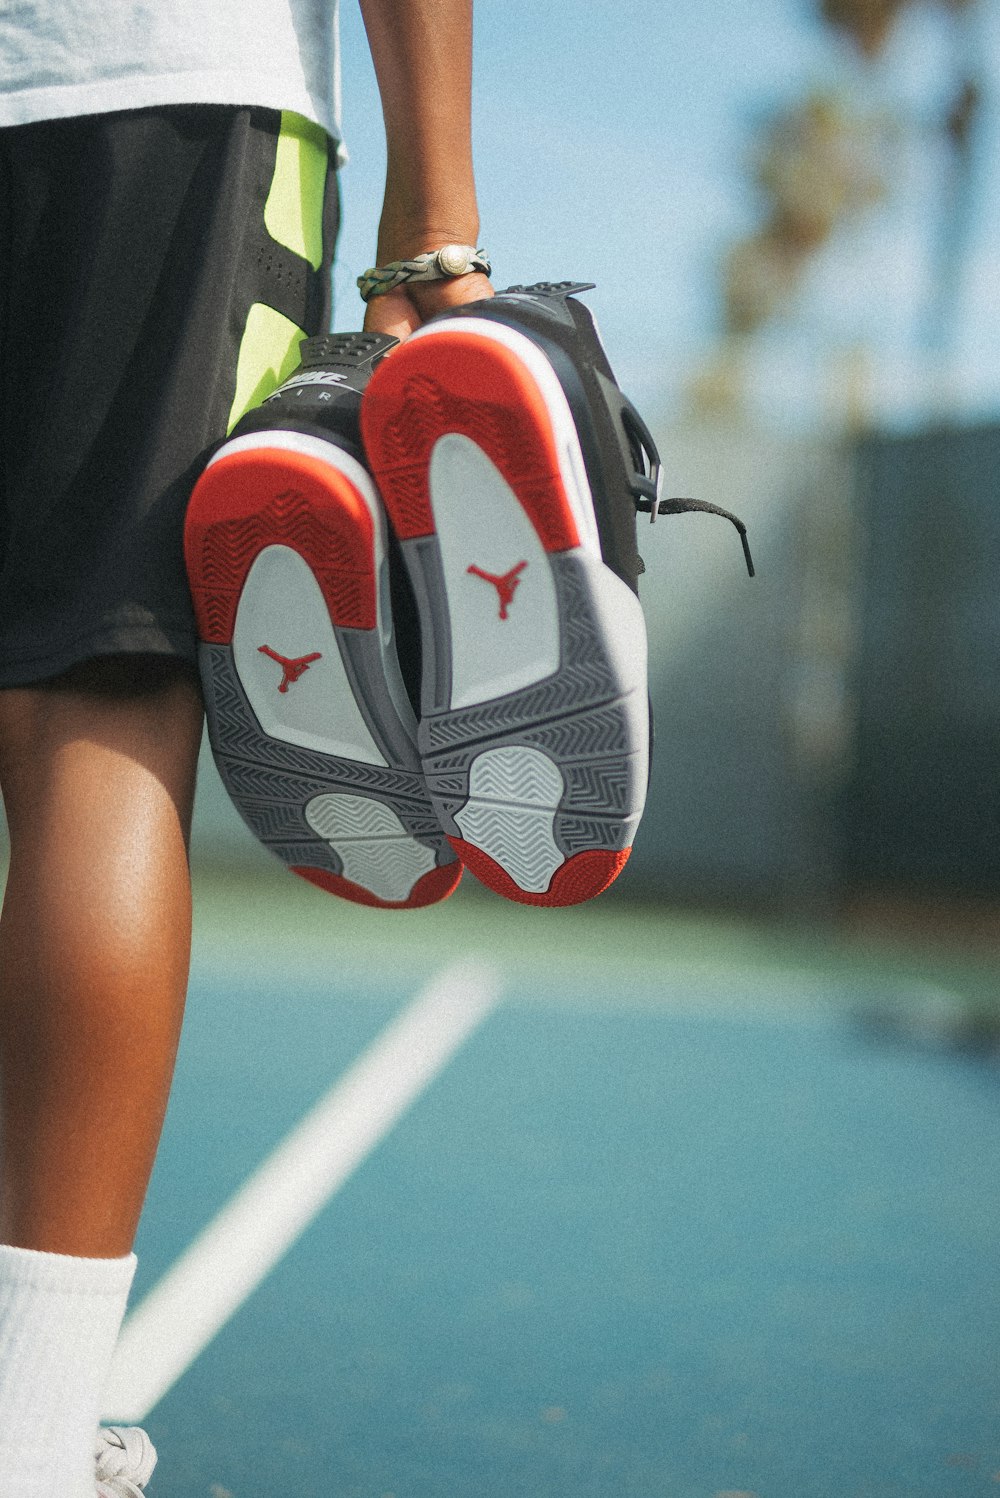 person holding orange,grey,white and black Air basketball during daytime close-up photography photo – Free Nike Image on Unsplash